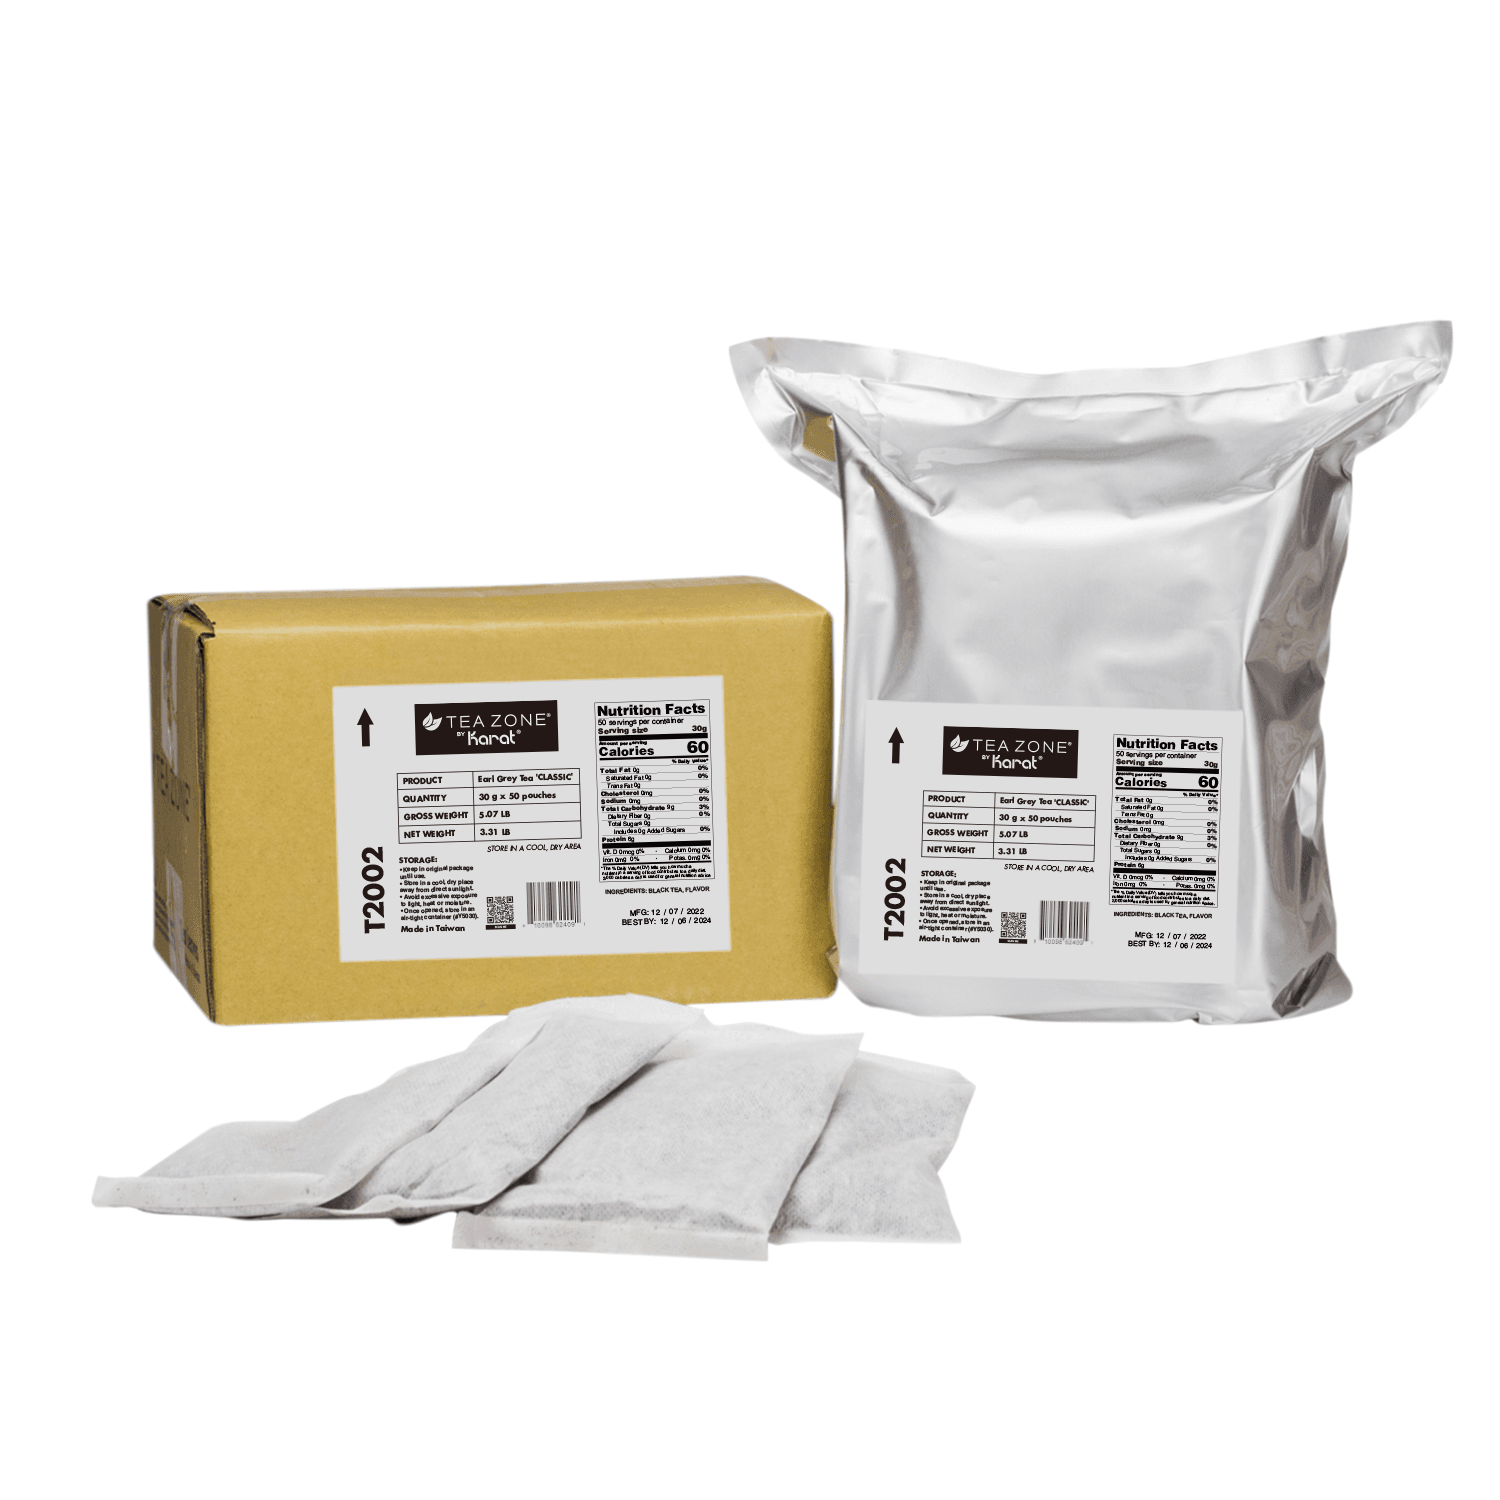 Tea Zone Classic Earl Grey Tea - Case of 50 bags